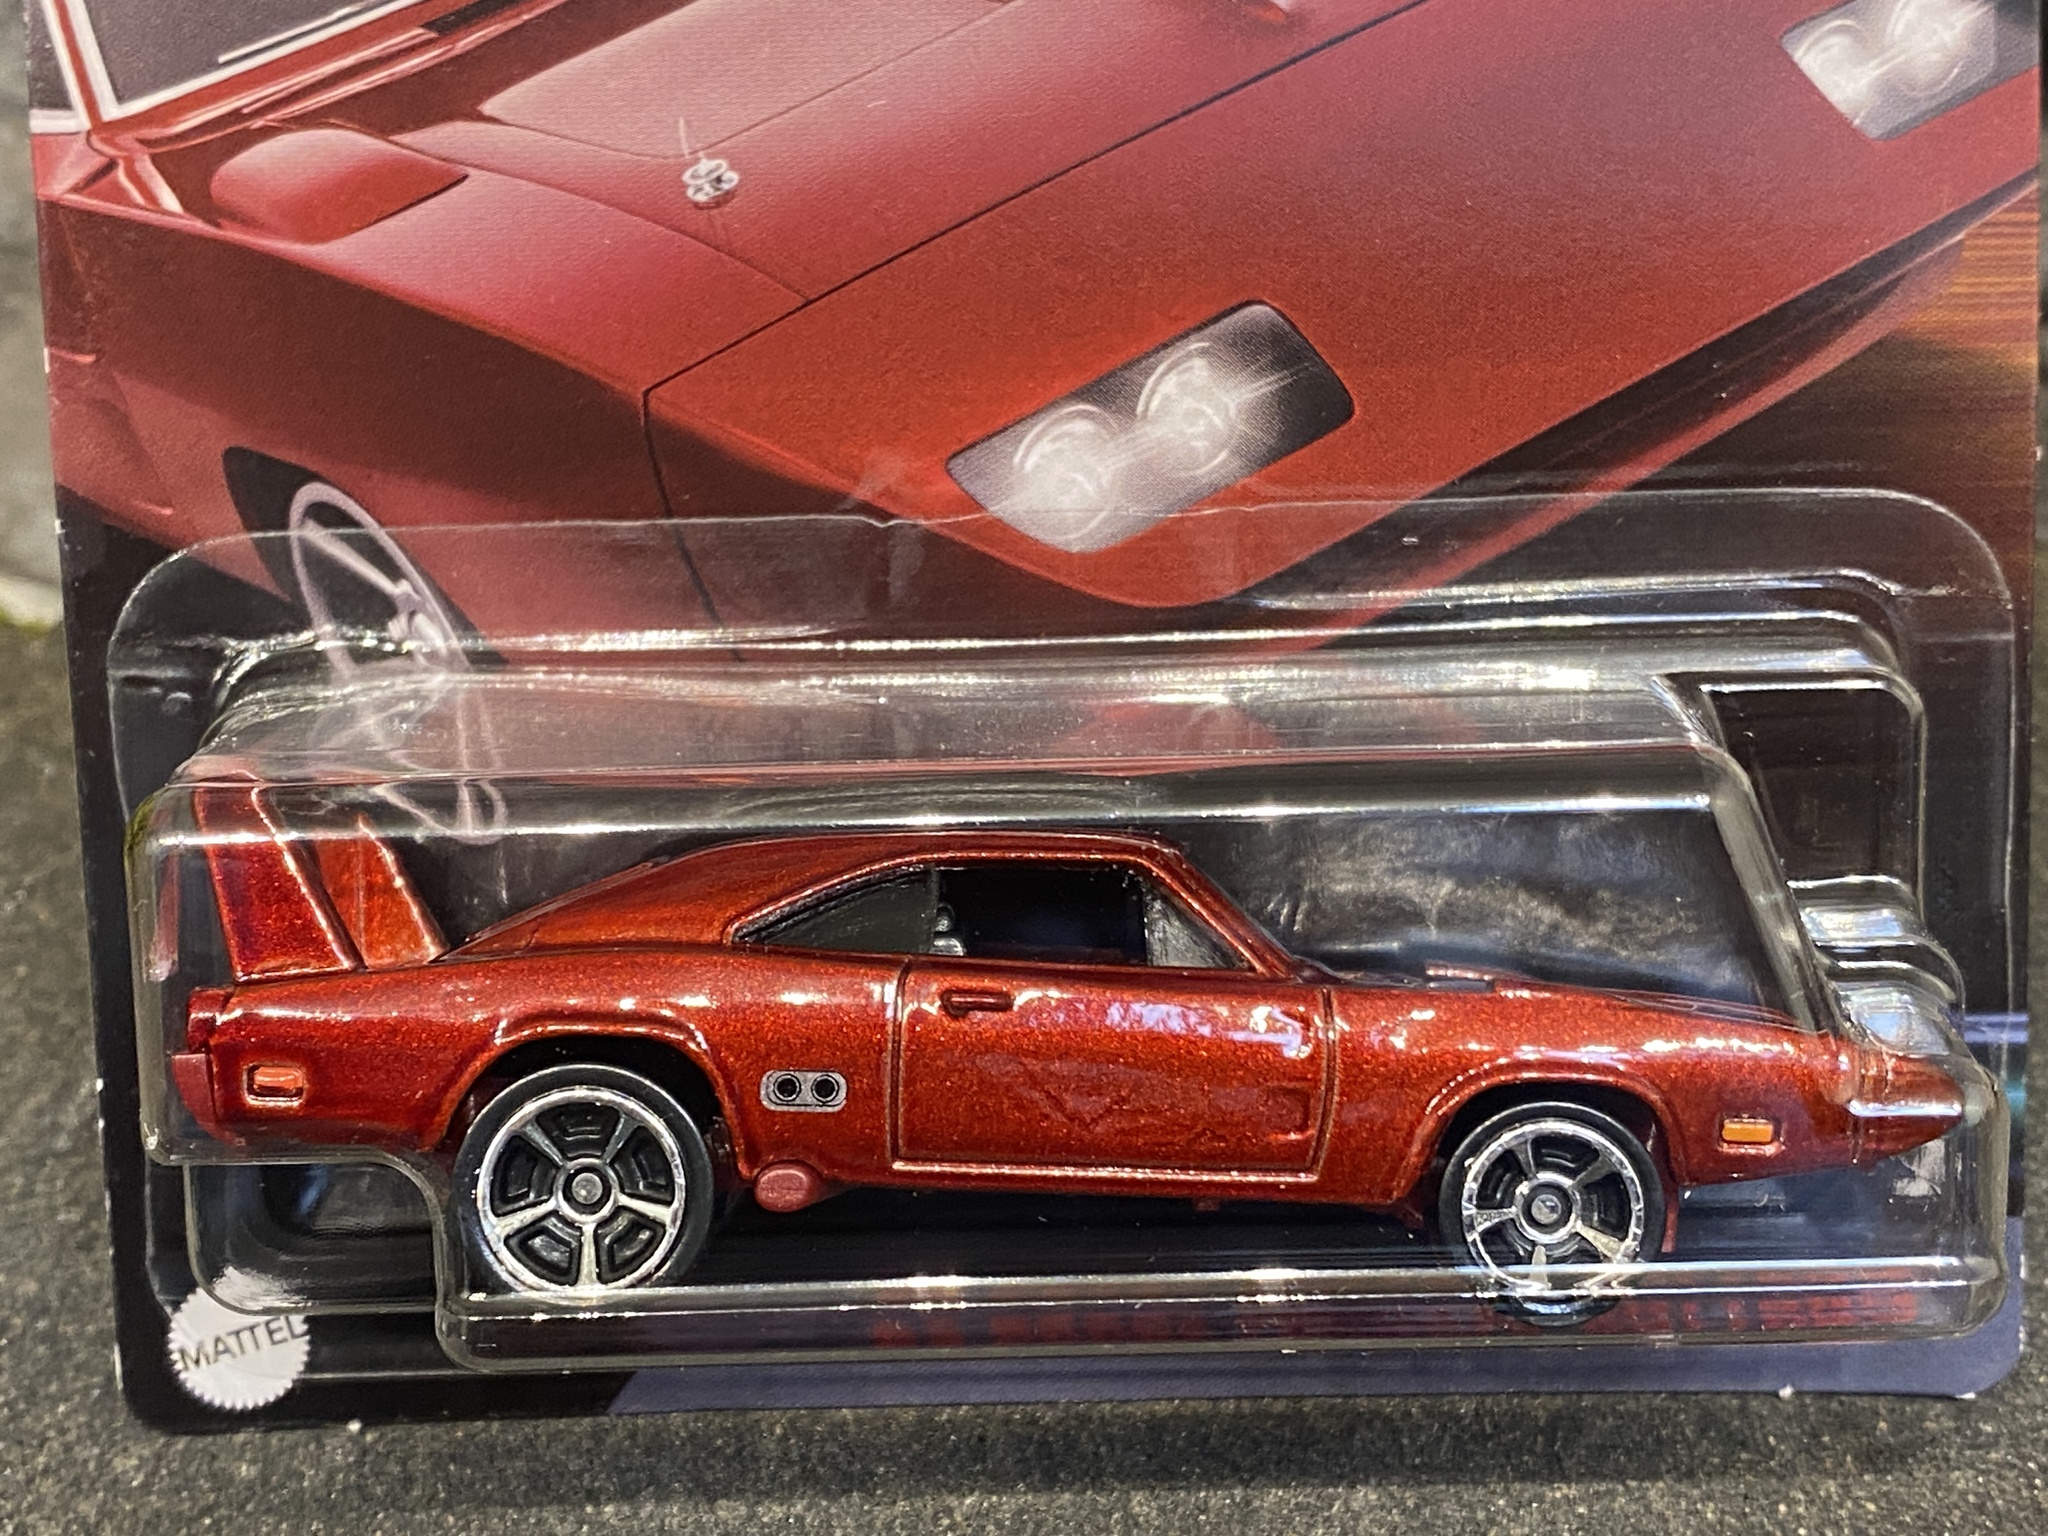 Skala 1/64 Hot Wheels - Fast & Furious: Dodge Charger Daytona